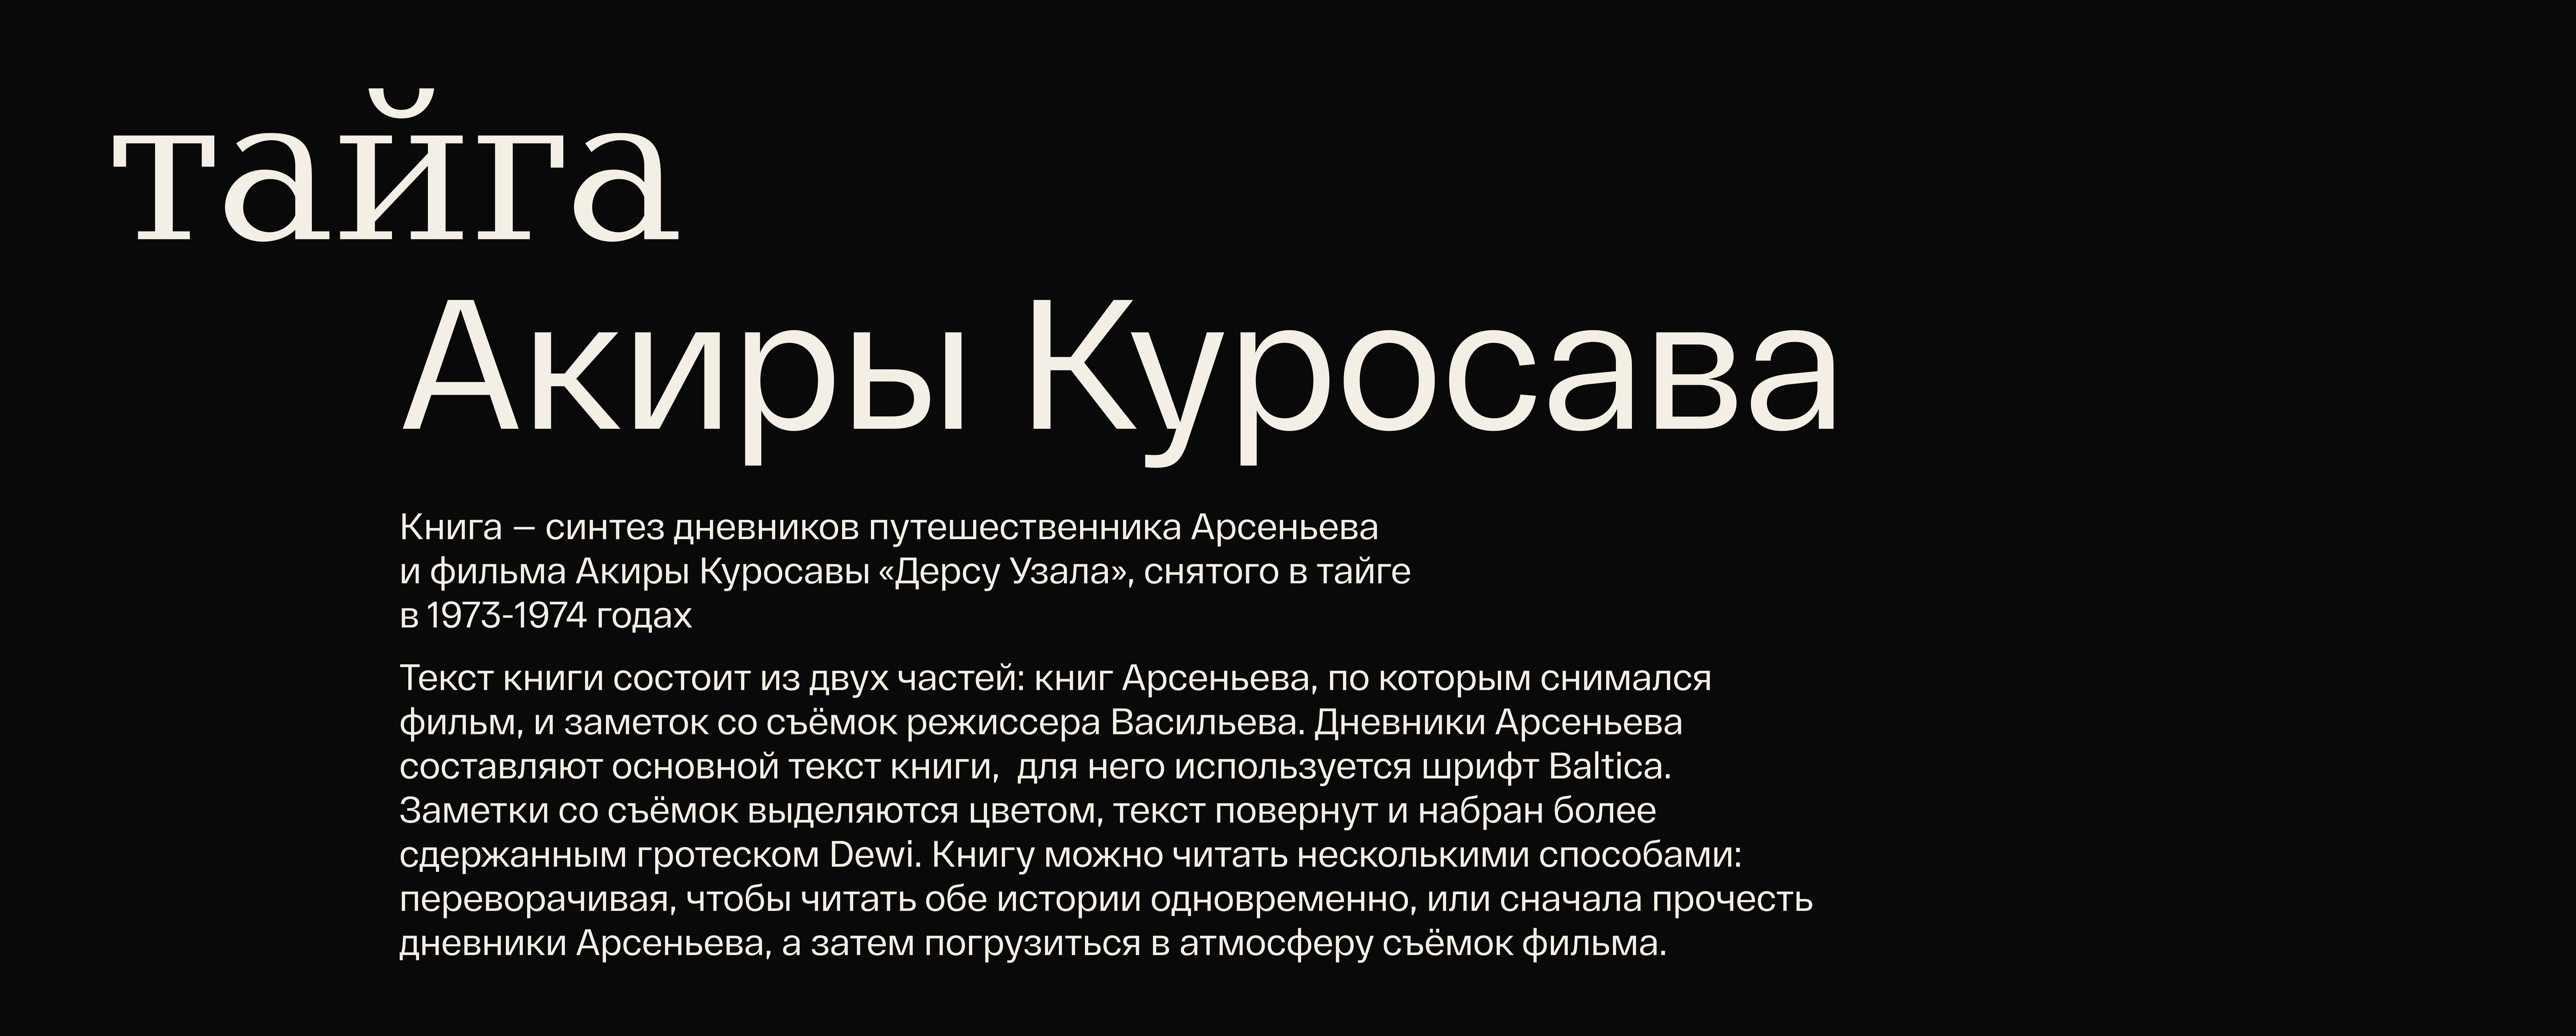 Тайга Акиры Куросава (книга) — Изображение №2 — Брендинг, Графика на Dprofile